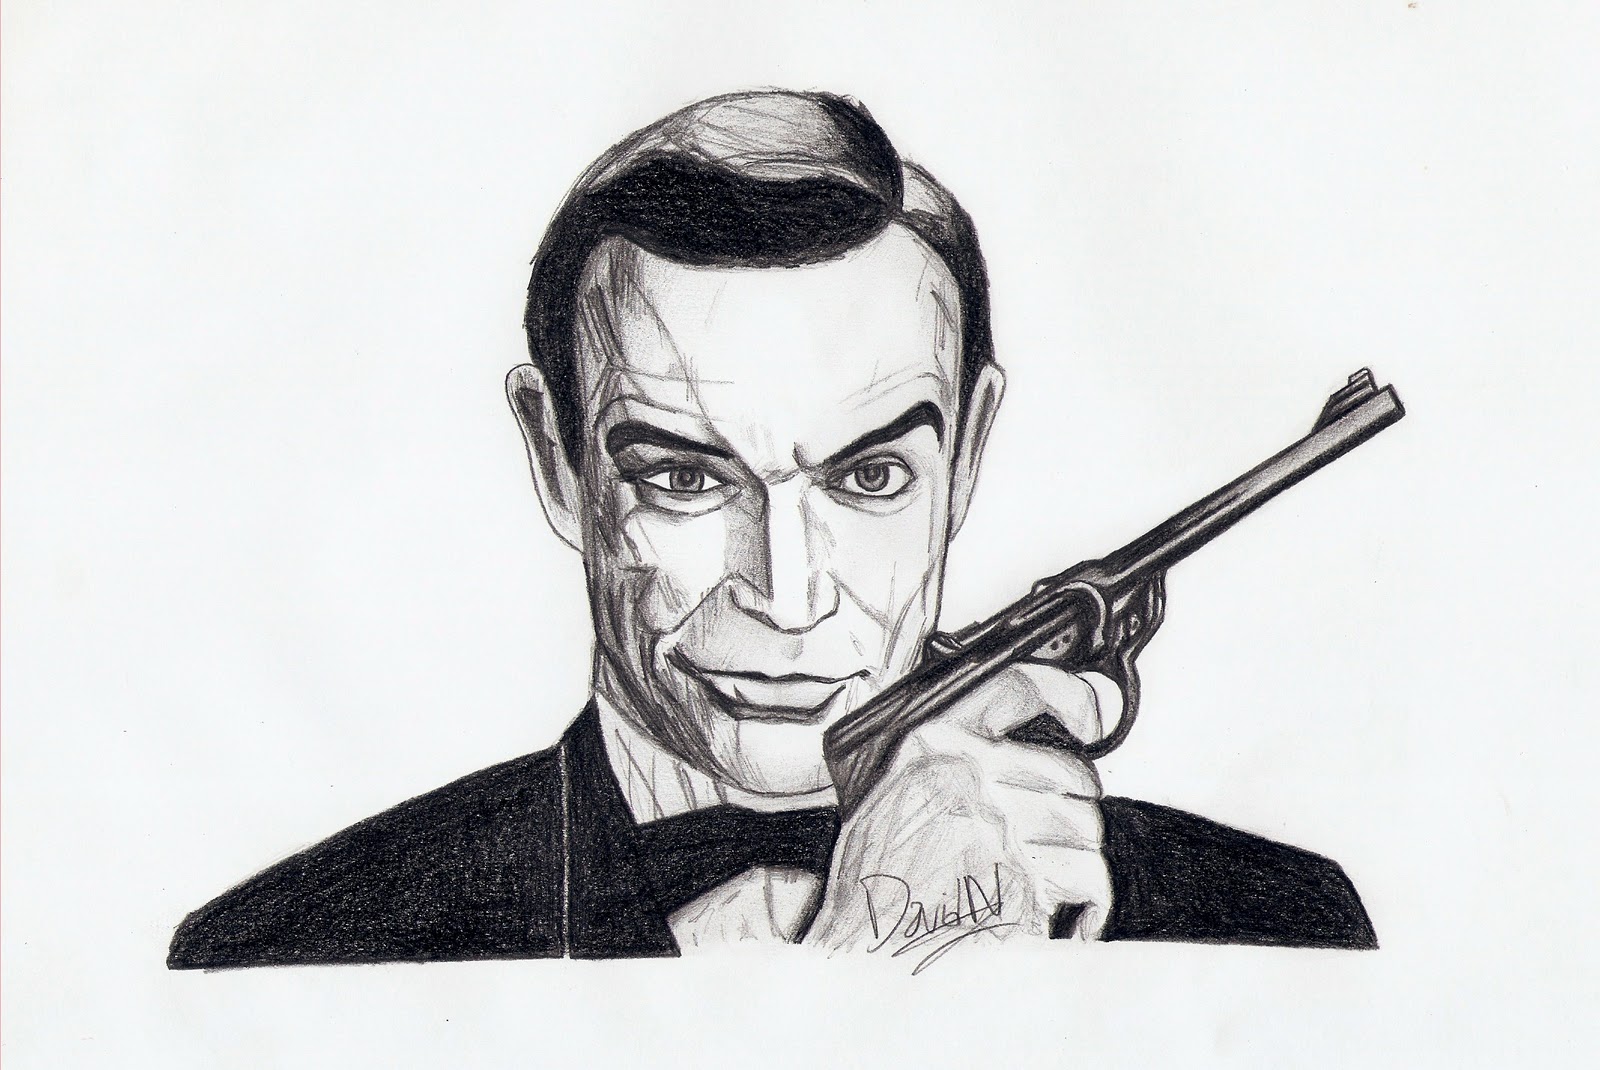 Universo Bond  Daniel Craig James Bond 007 Art by carbajalpatricio  JamesBond IanFleming 007 DanielCraig Bond UniversoBond  Facebook